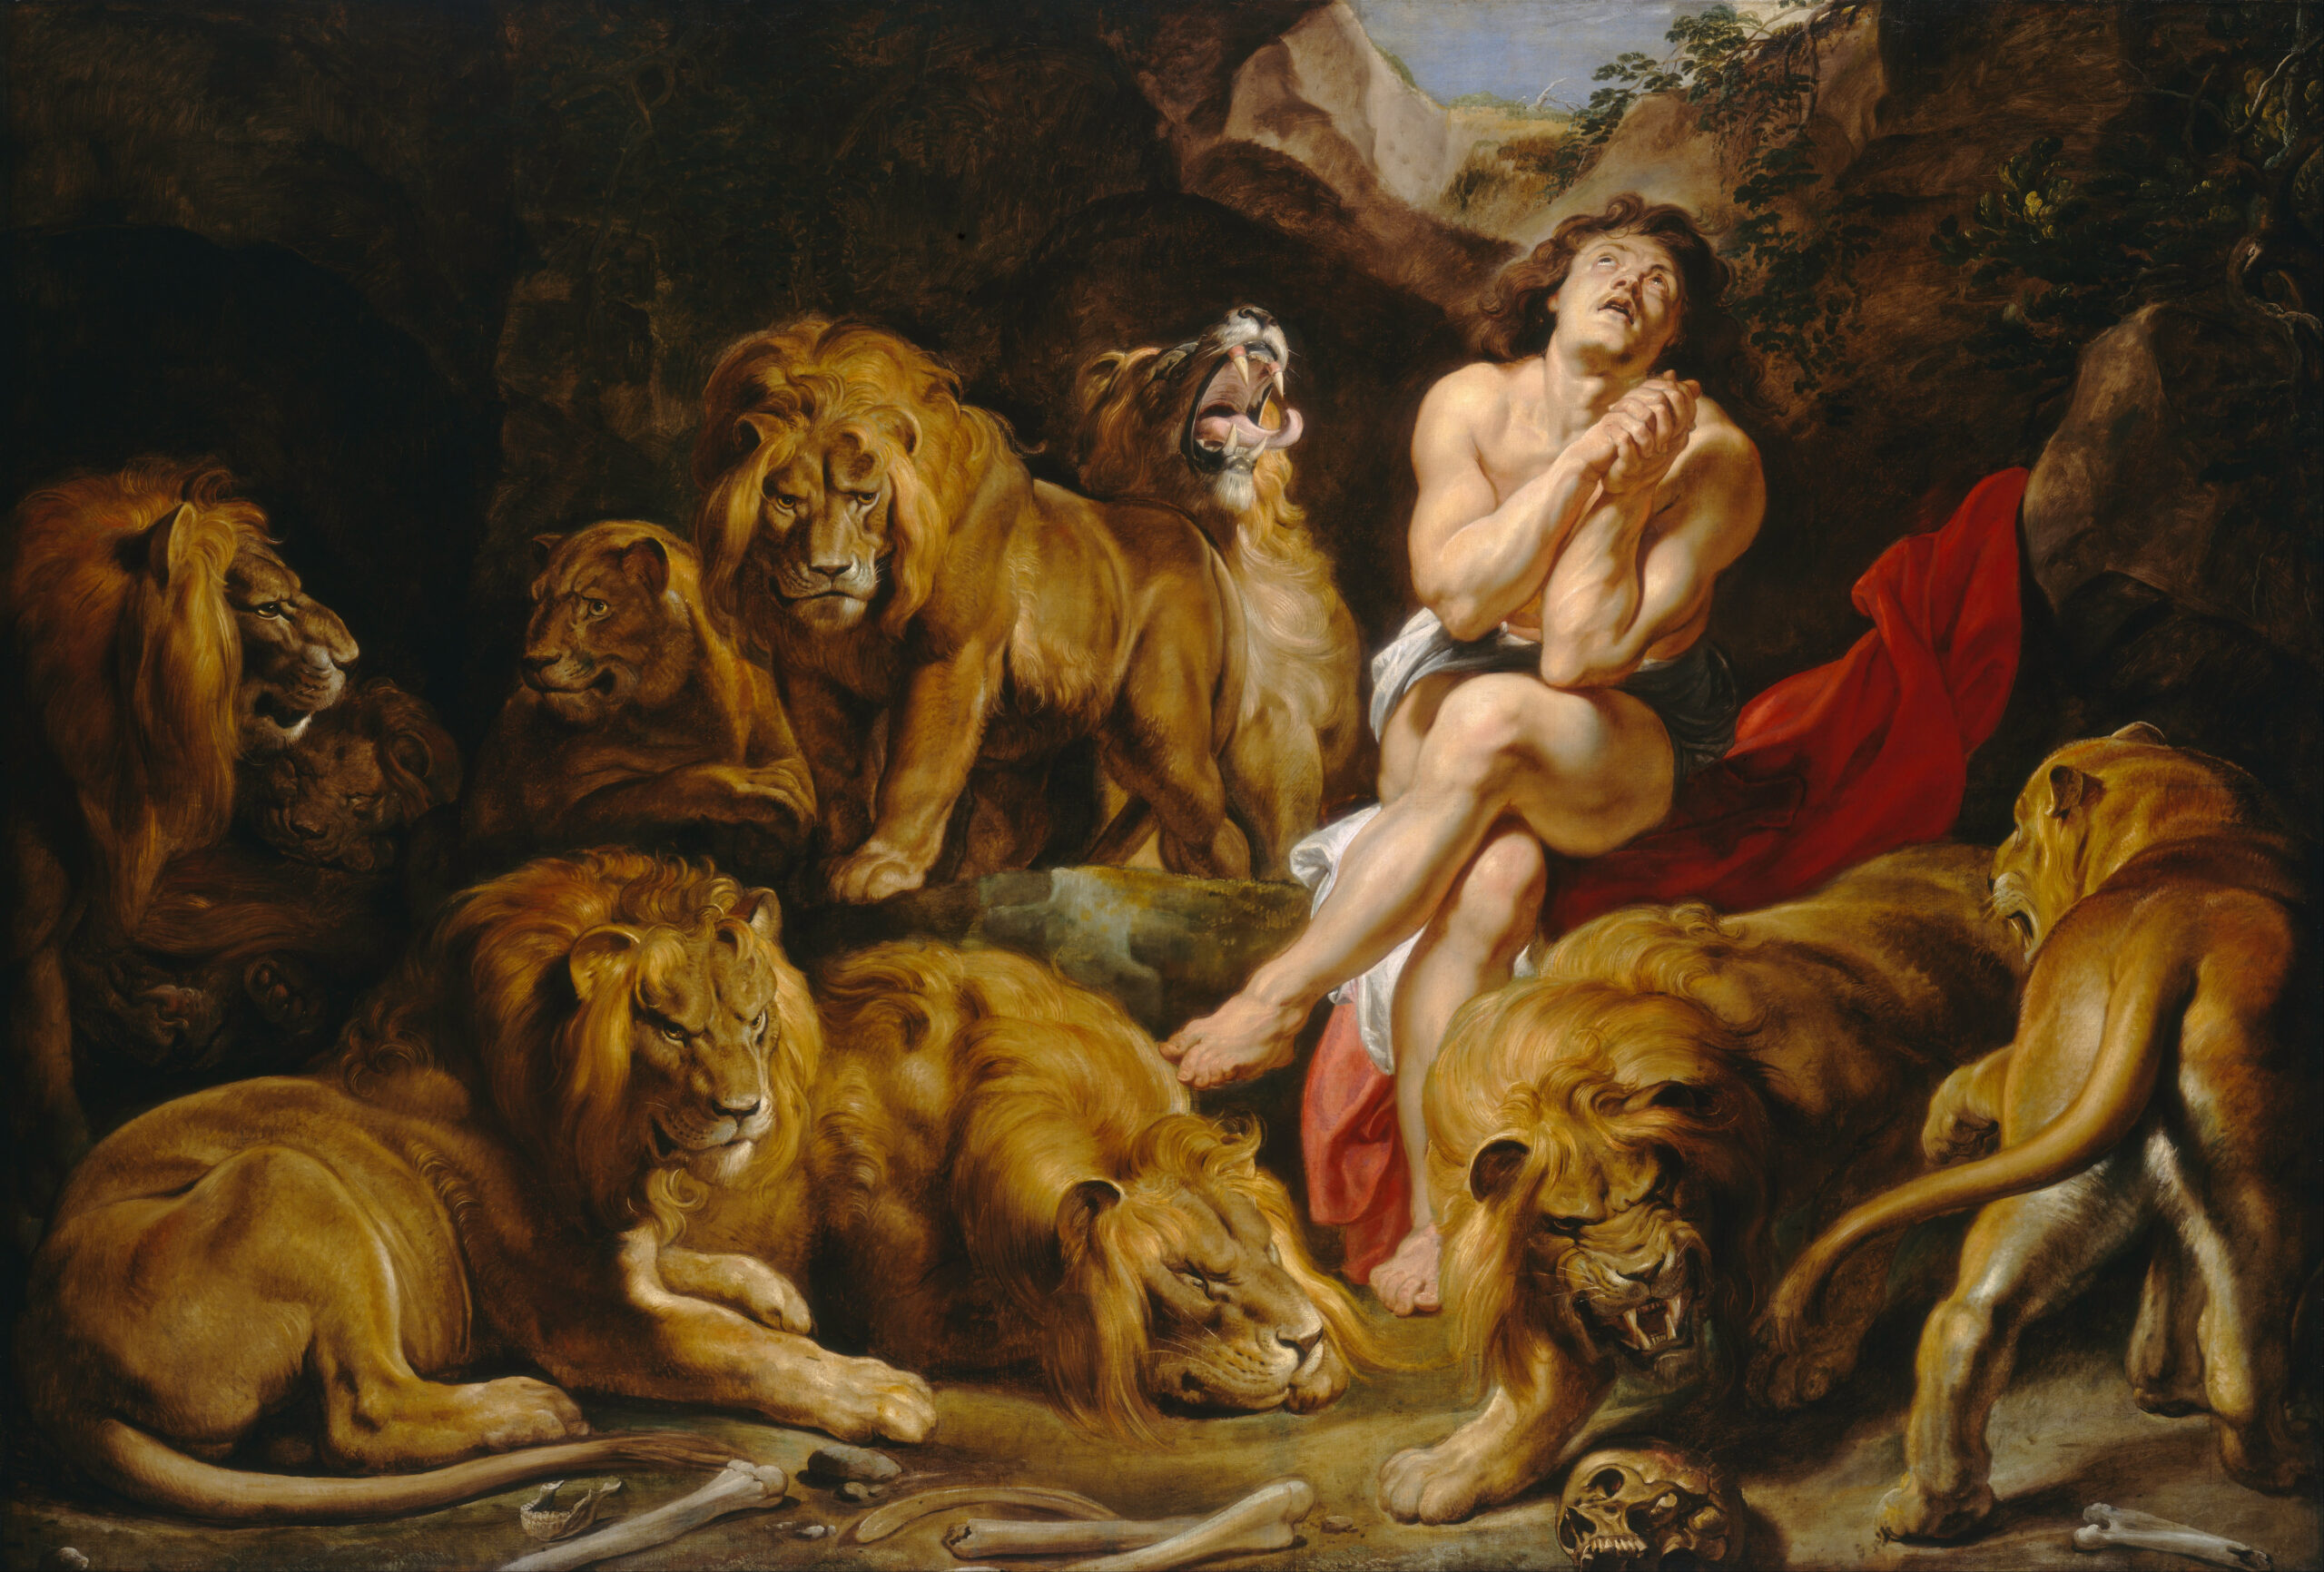 Daniel in the Lions' Den, c. 1615 by Pieter Paul Rubens